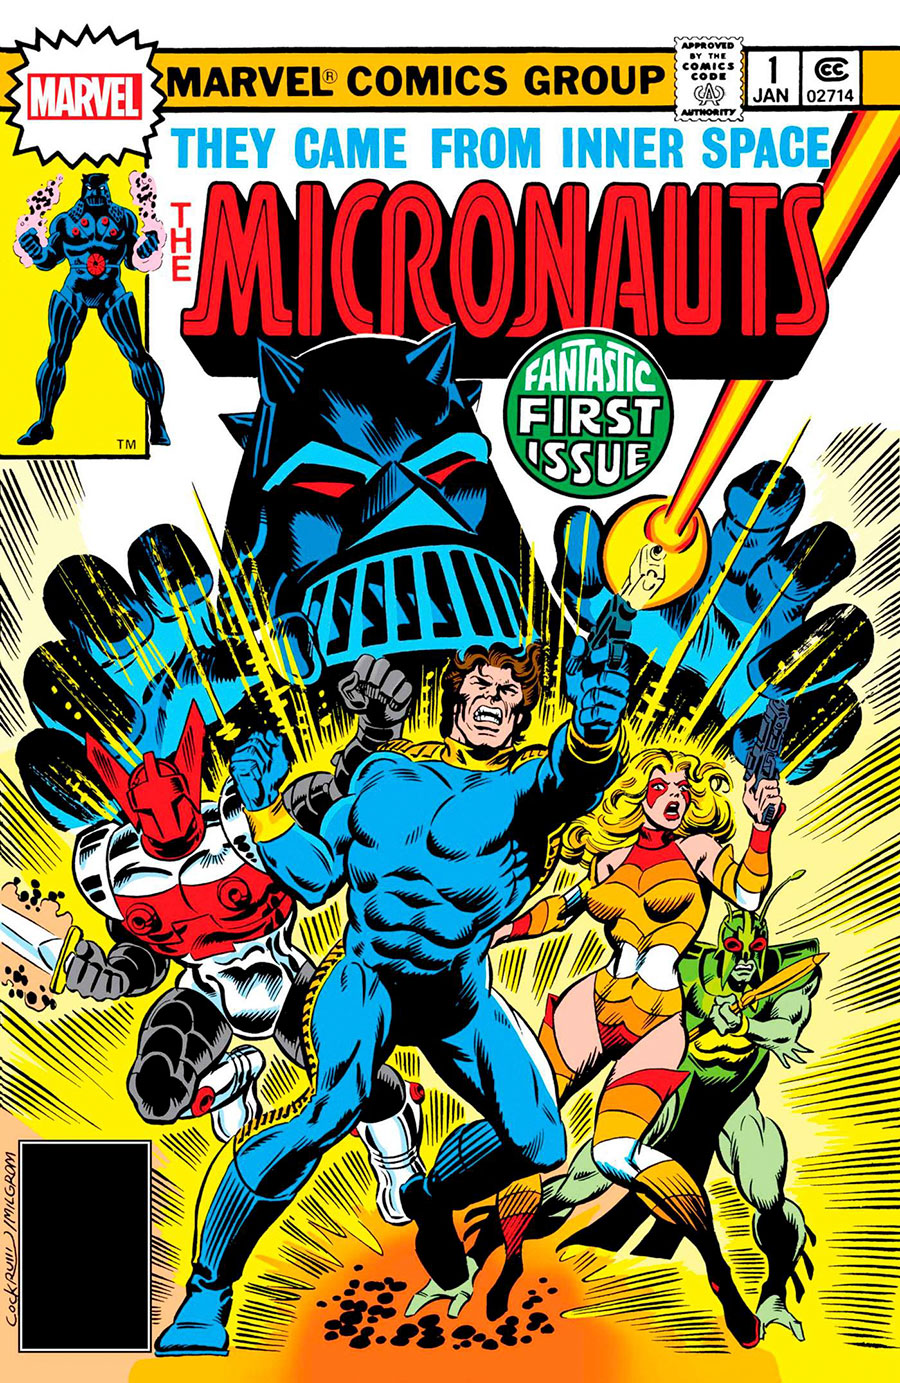 Micronauts #1 Cover B Facsimile Edition Regular Dave Cockrum Cover